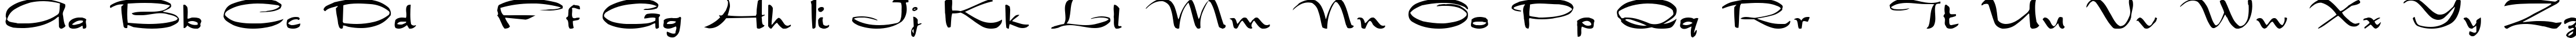 Пример написания английского алфавита шрифтом Drakkar